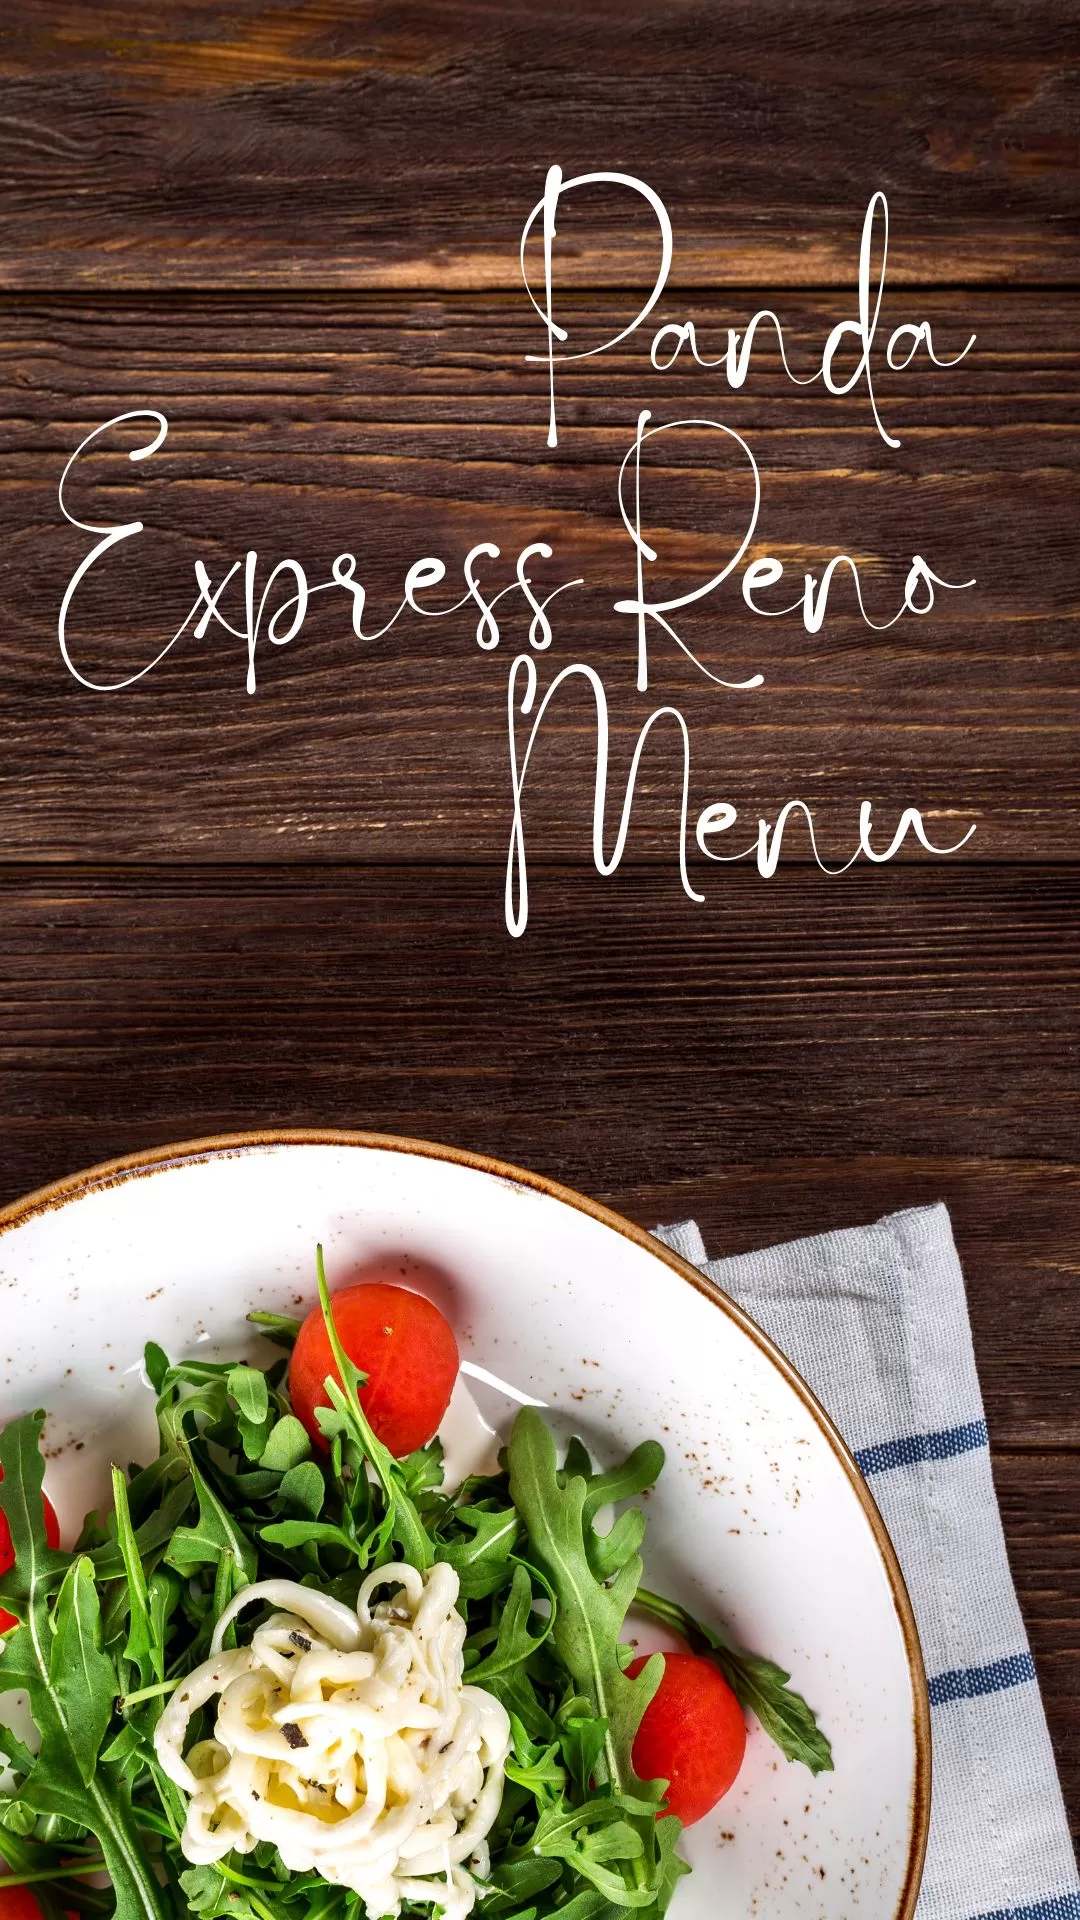 panda express reno menu